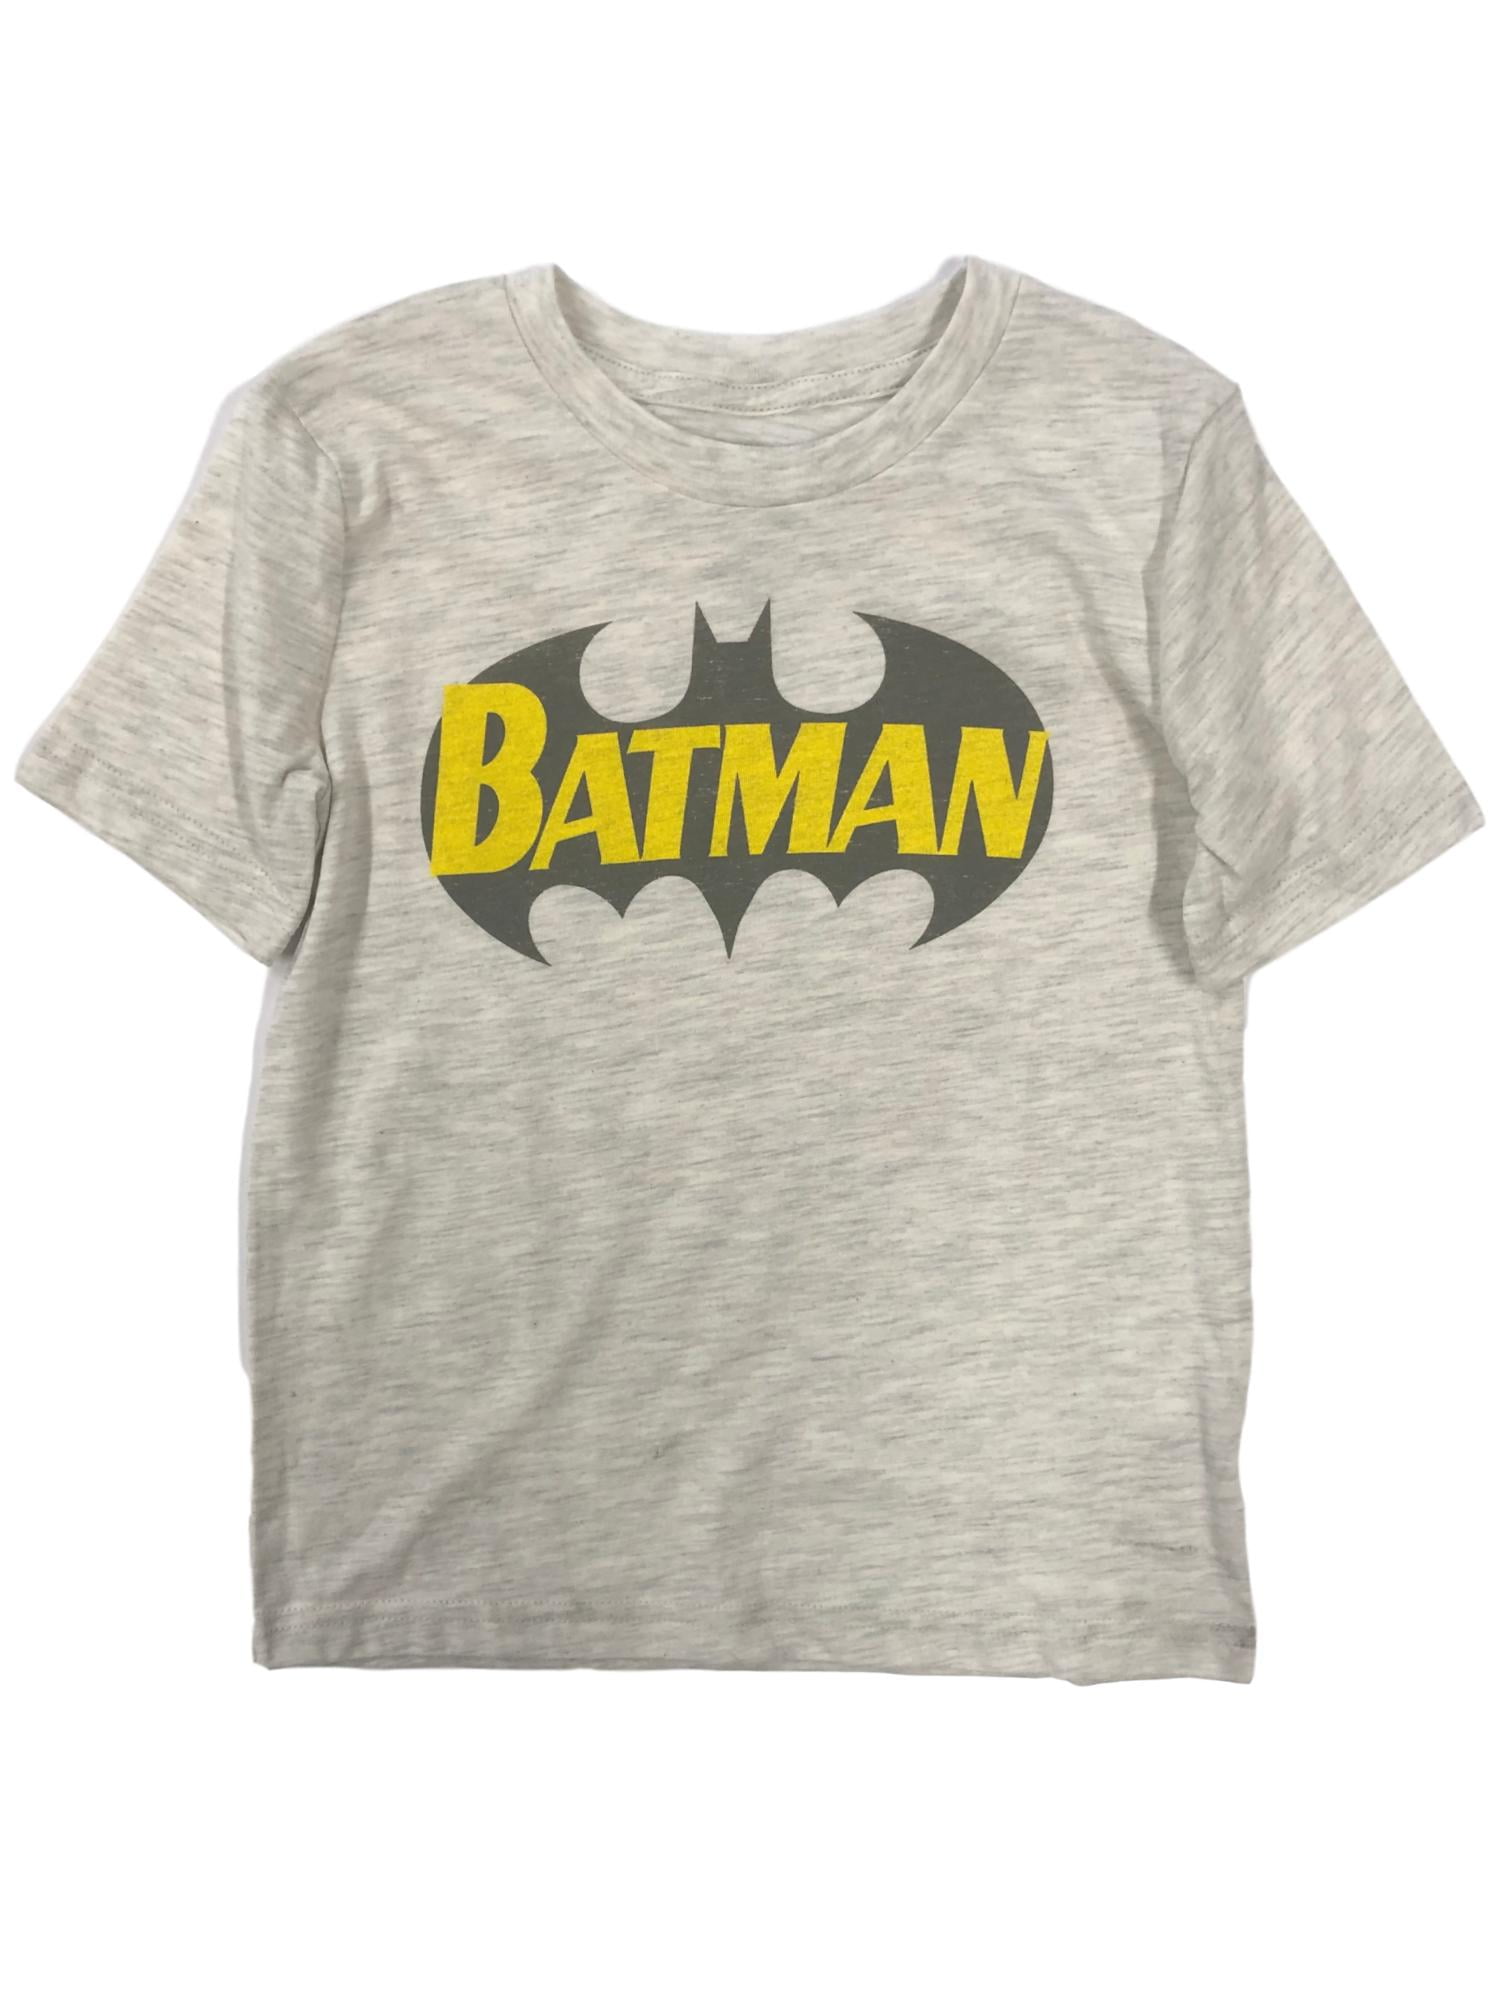 Batman Toddler Boys Gray & Yellow T-Shirt Superhero Tee Shirt 4T -  